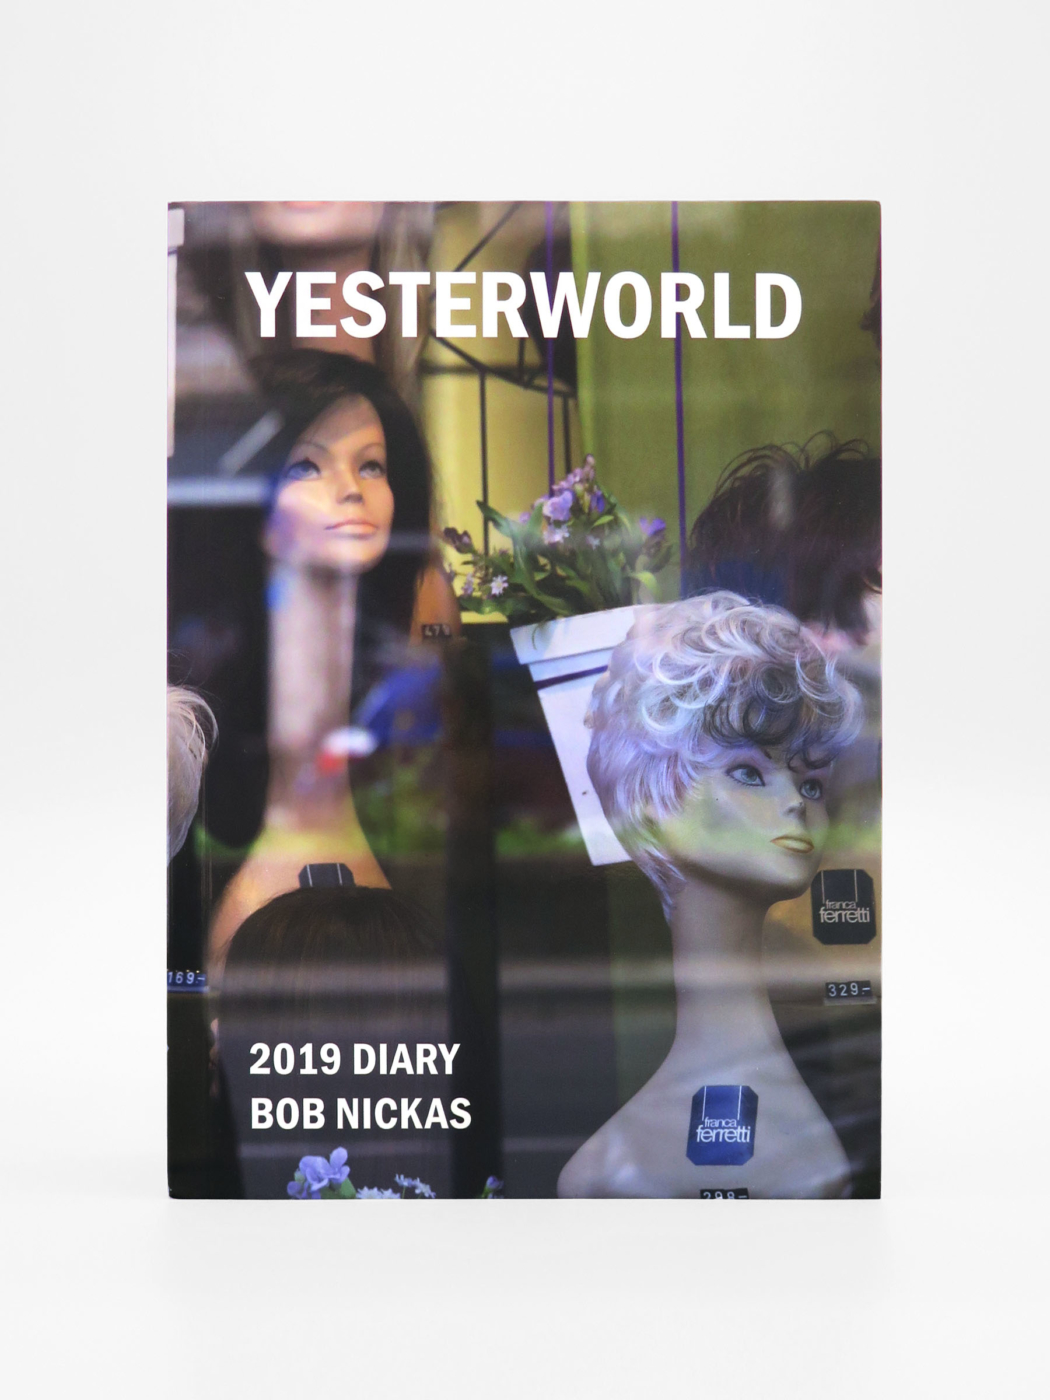 Bob Nickas, Yesterworld